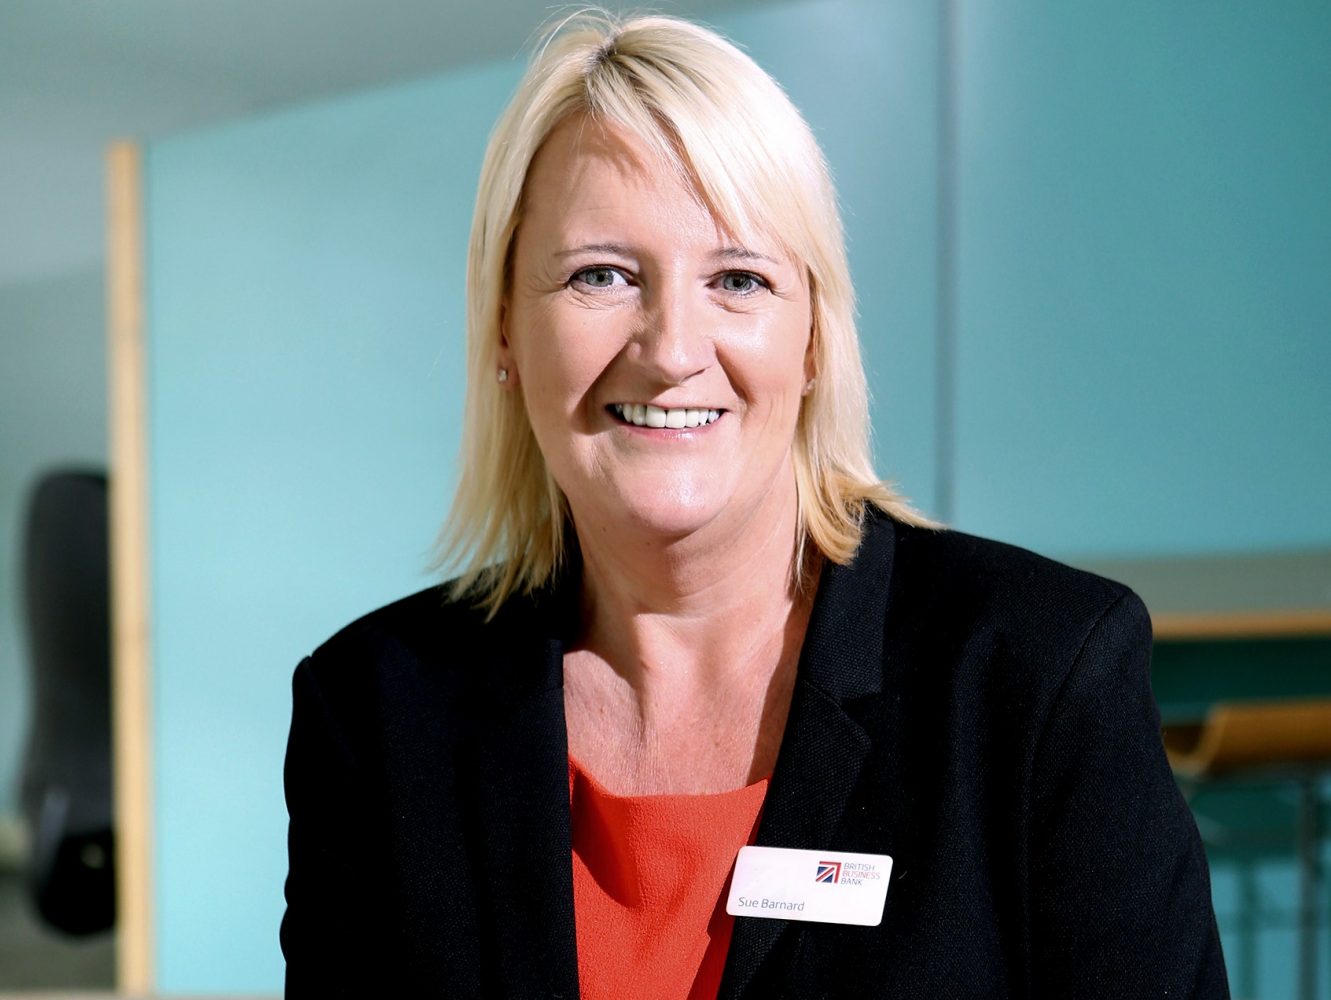 Headshot of Sue Barnard, the UKN Senior Manager at the British Business Bank